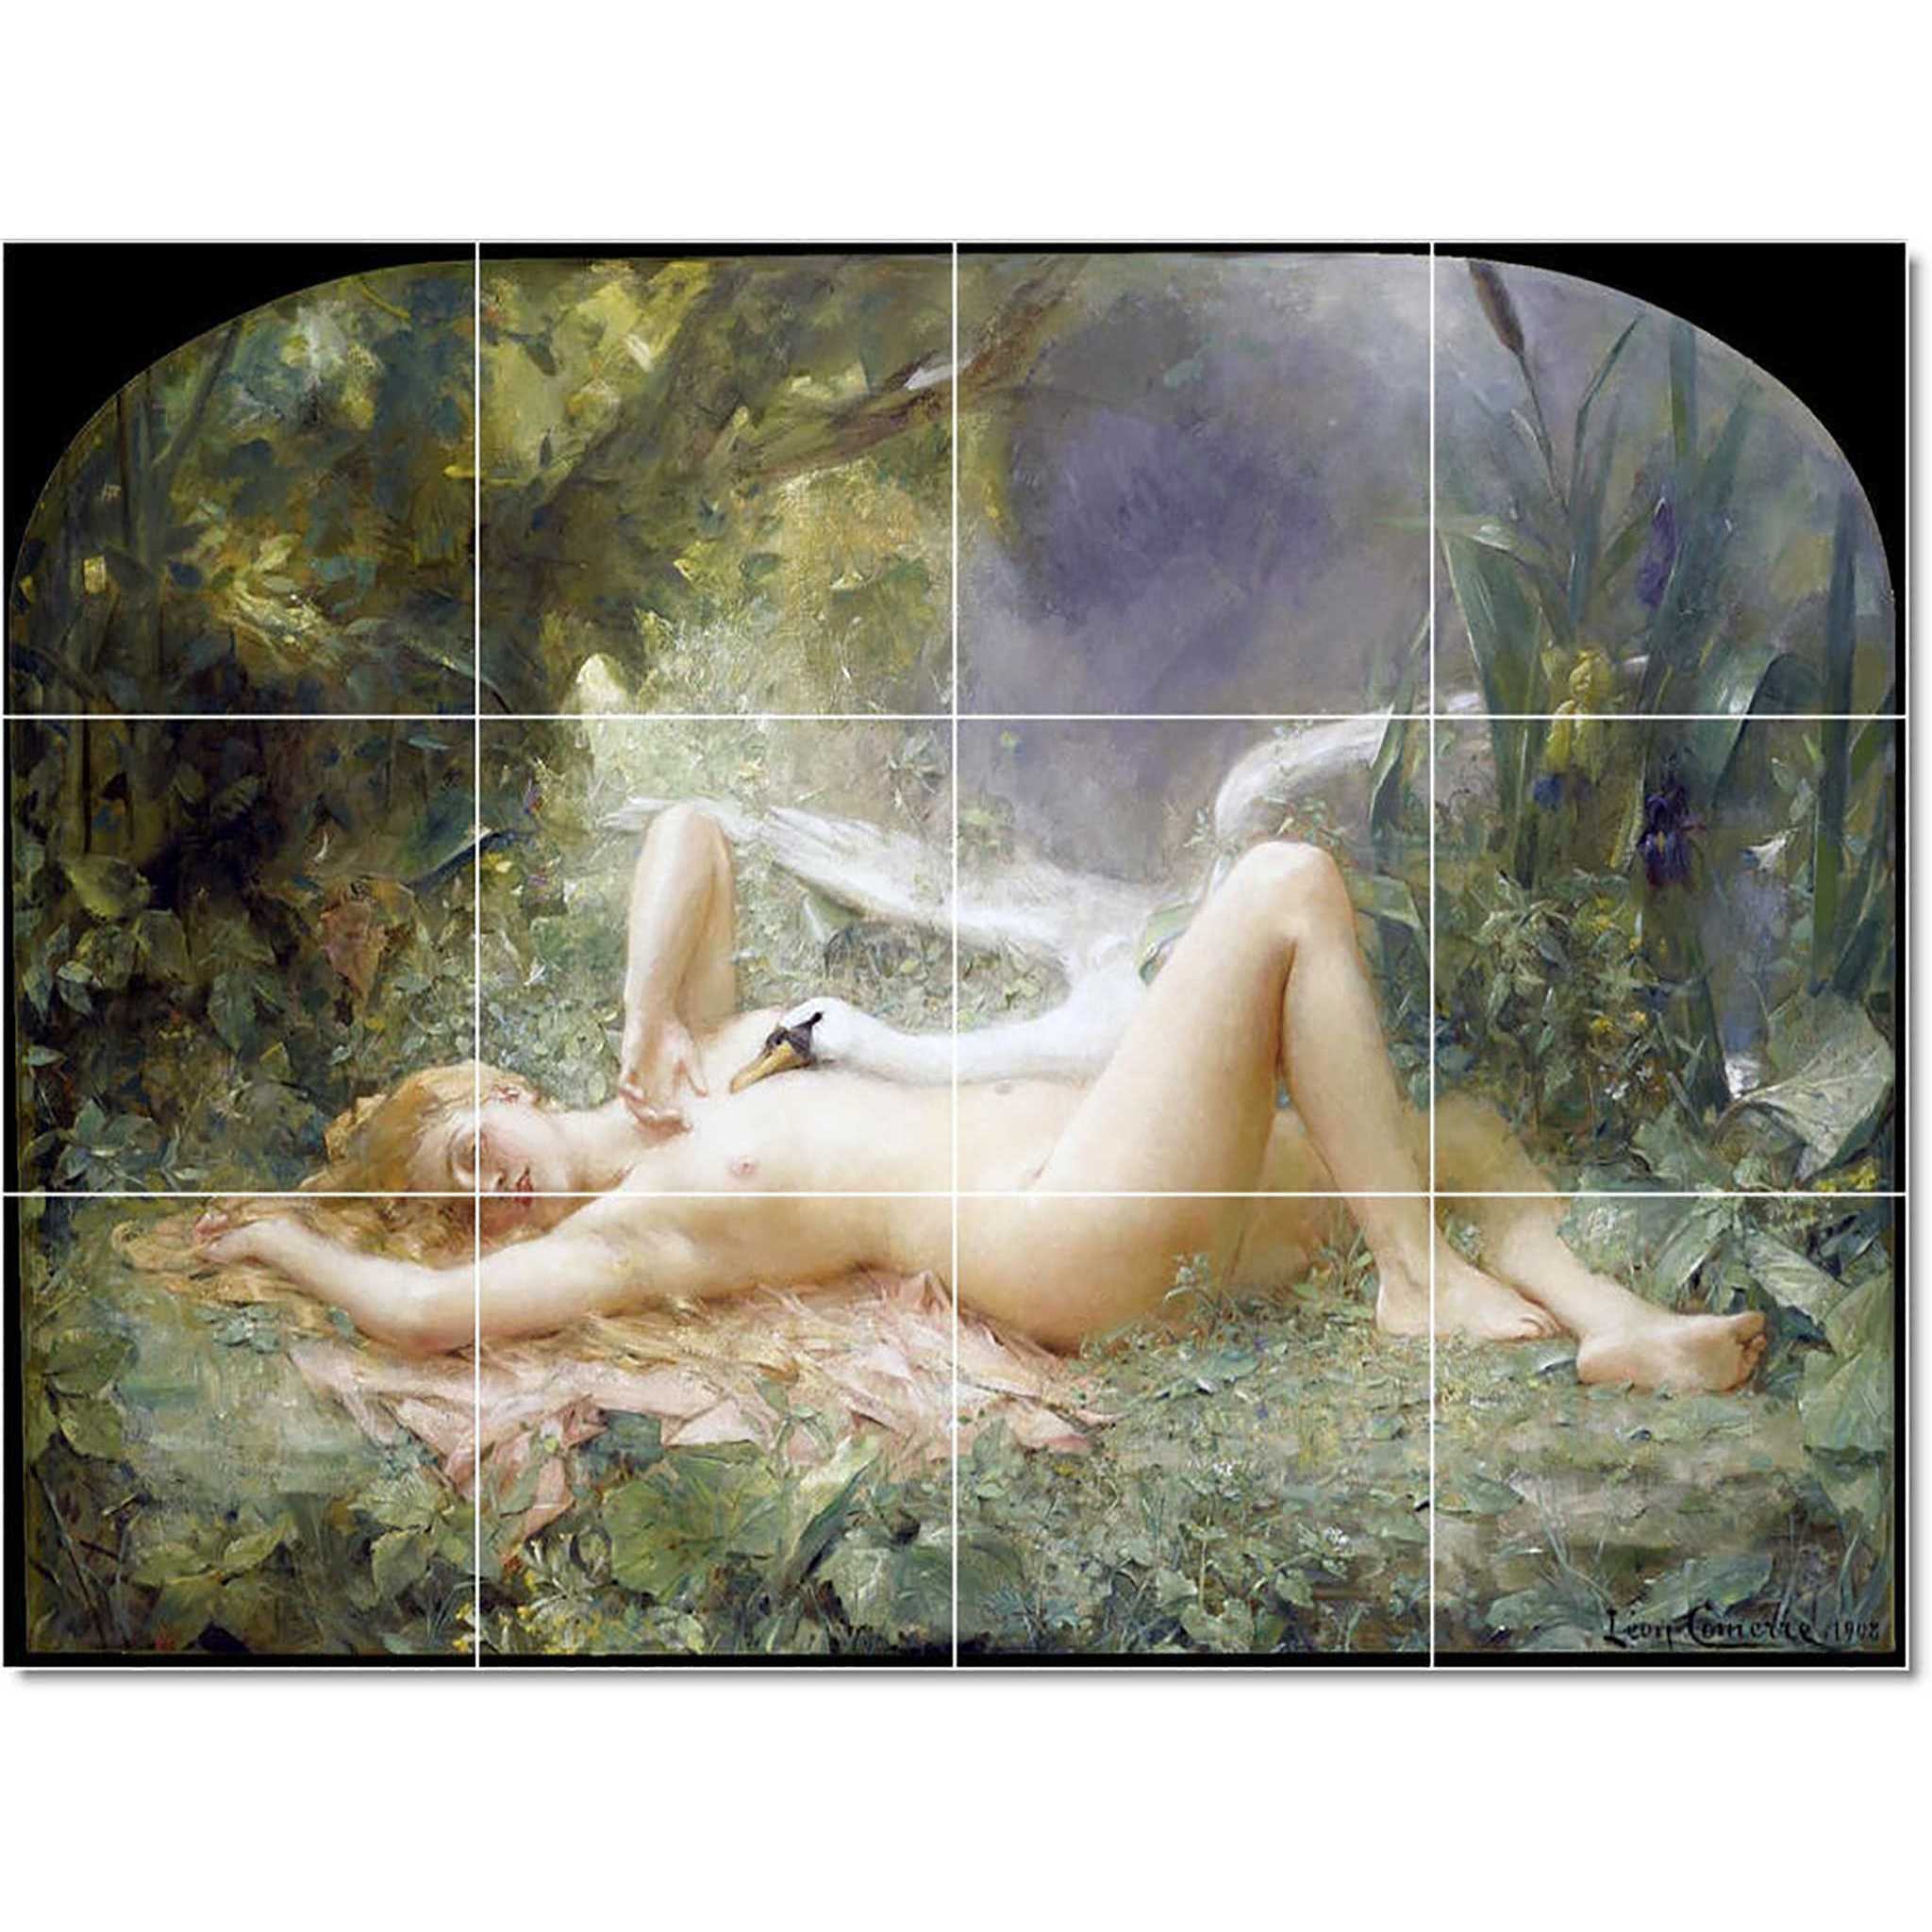 leon francois comerre nude painting ceramic tile mural p22253